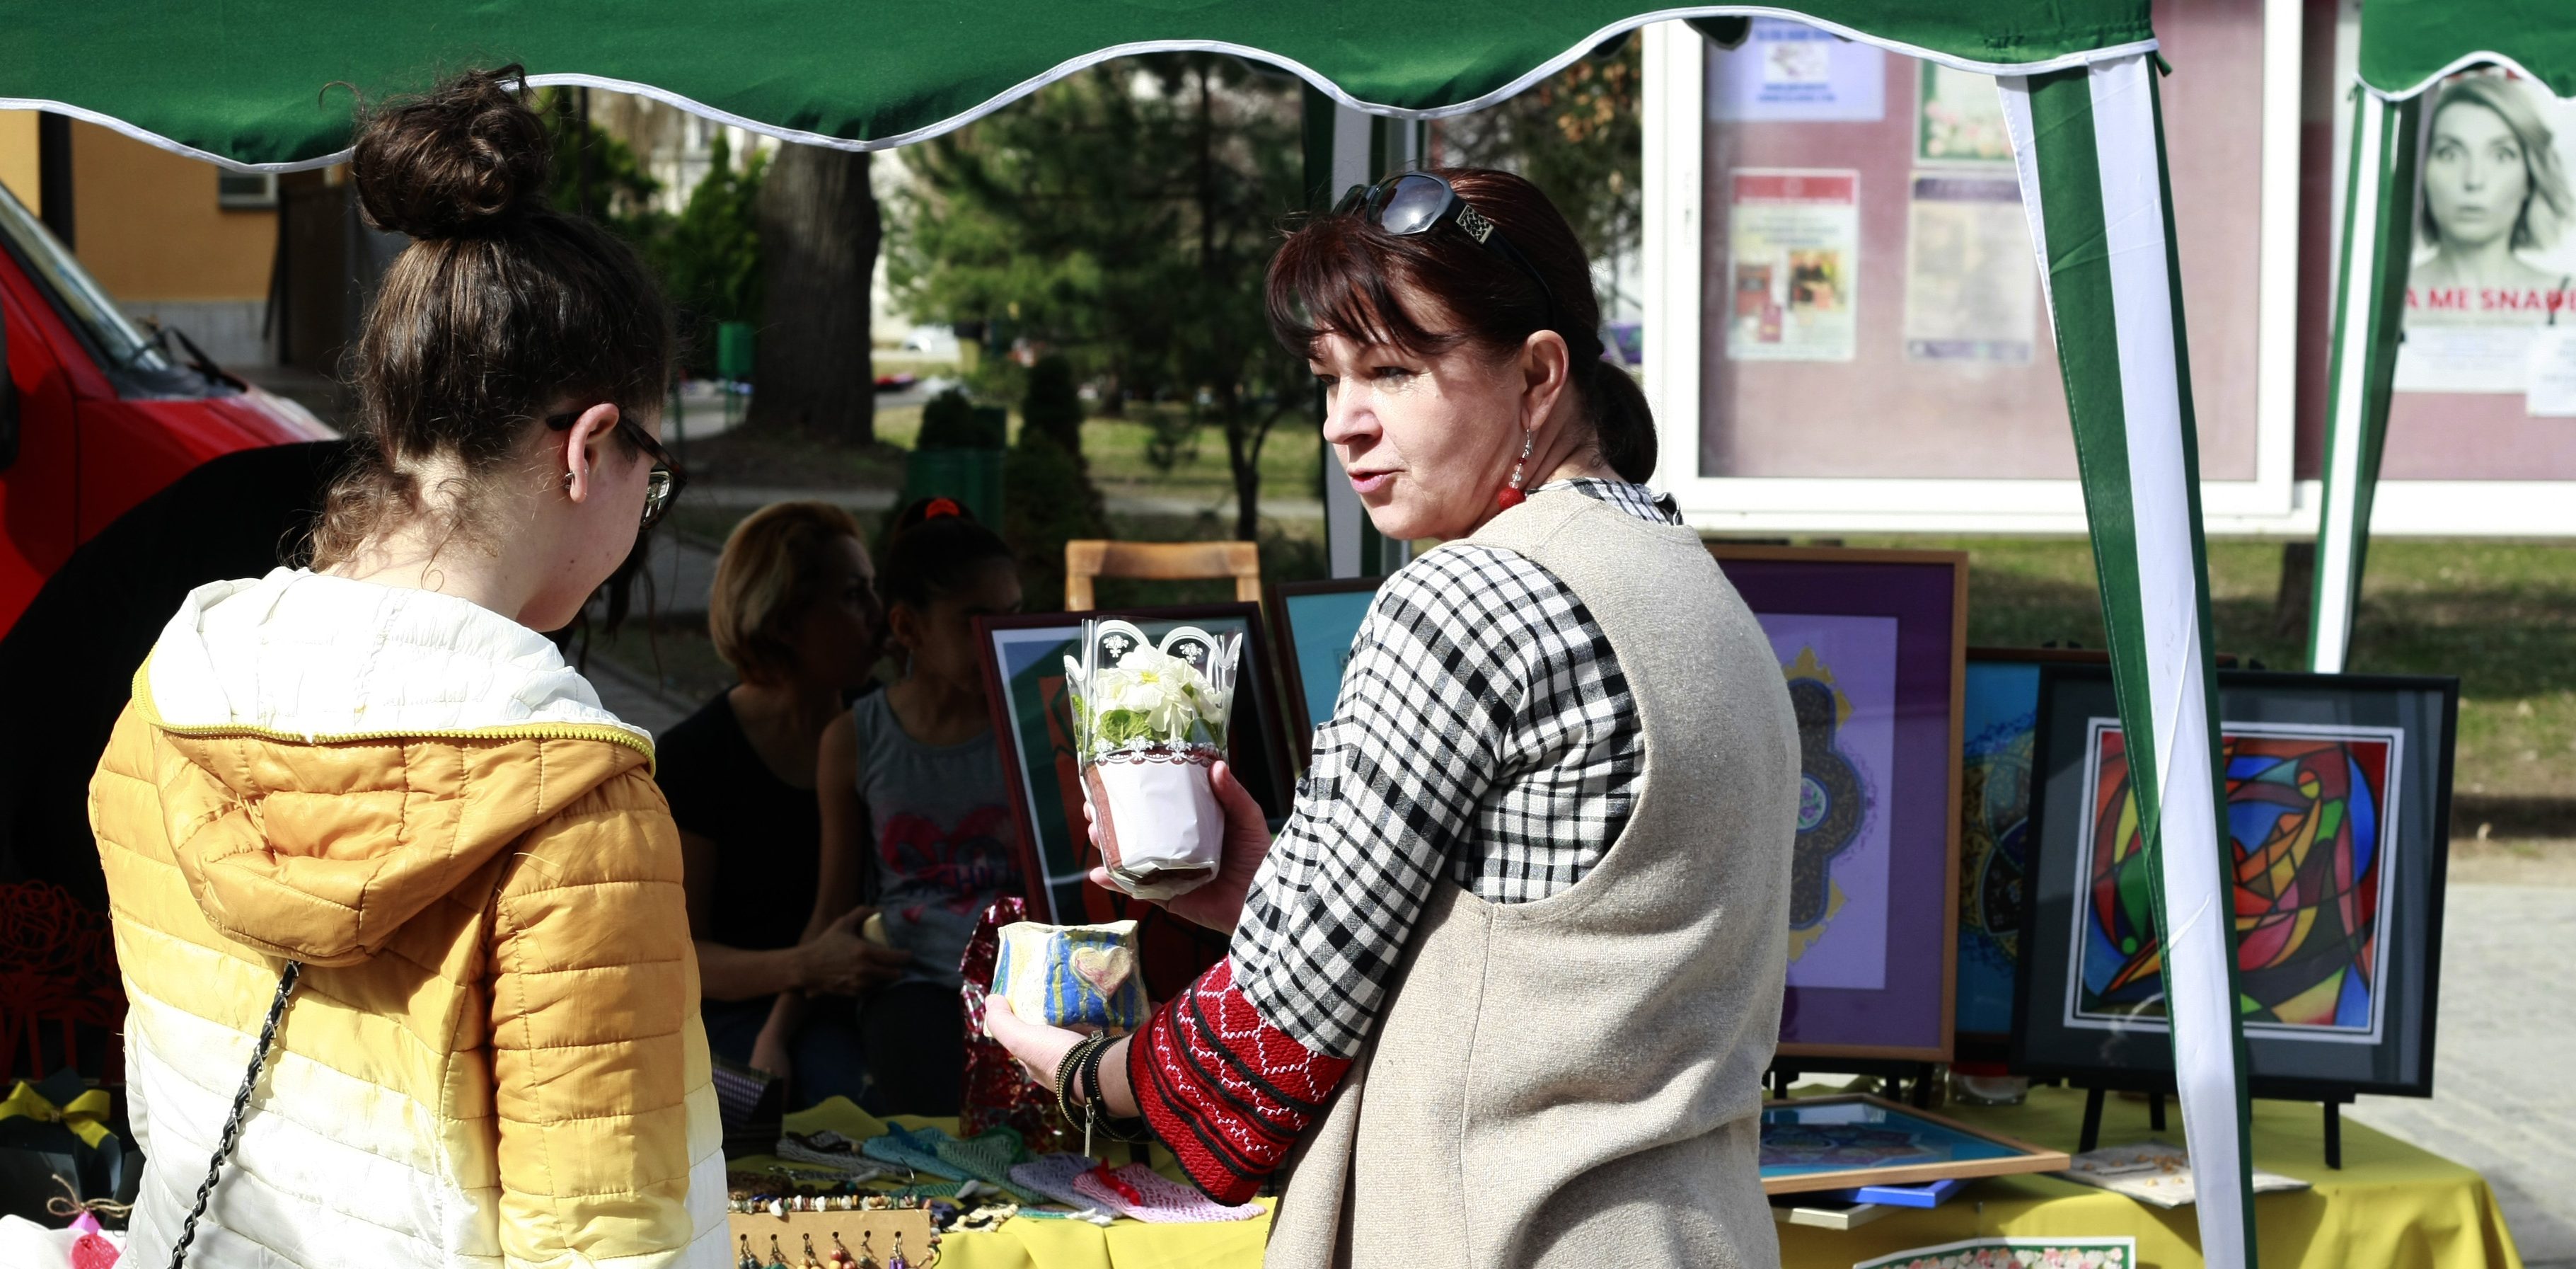 Migrant women exhibited their work at the handicrafts fair in Banja Koviljaca